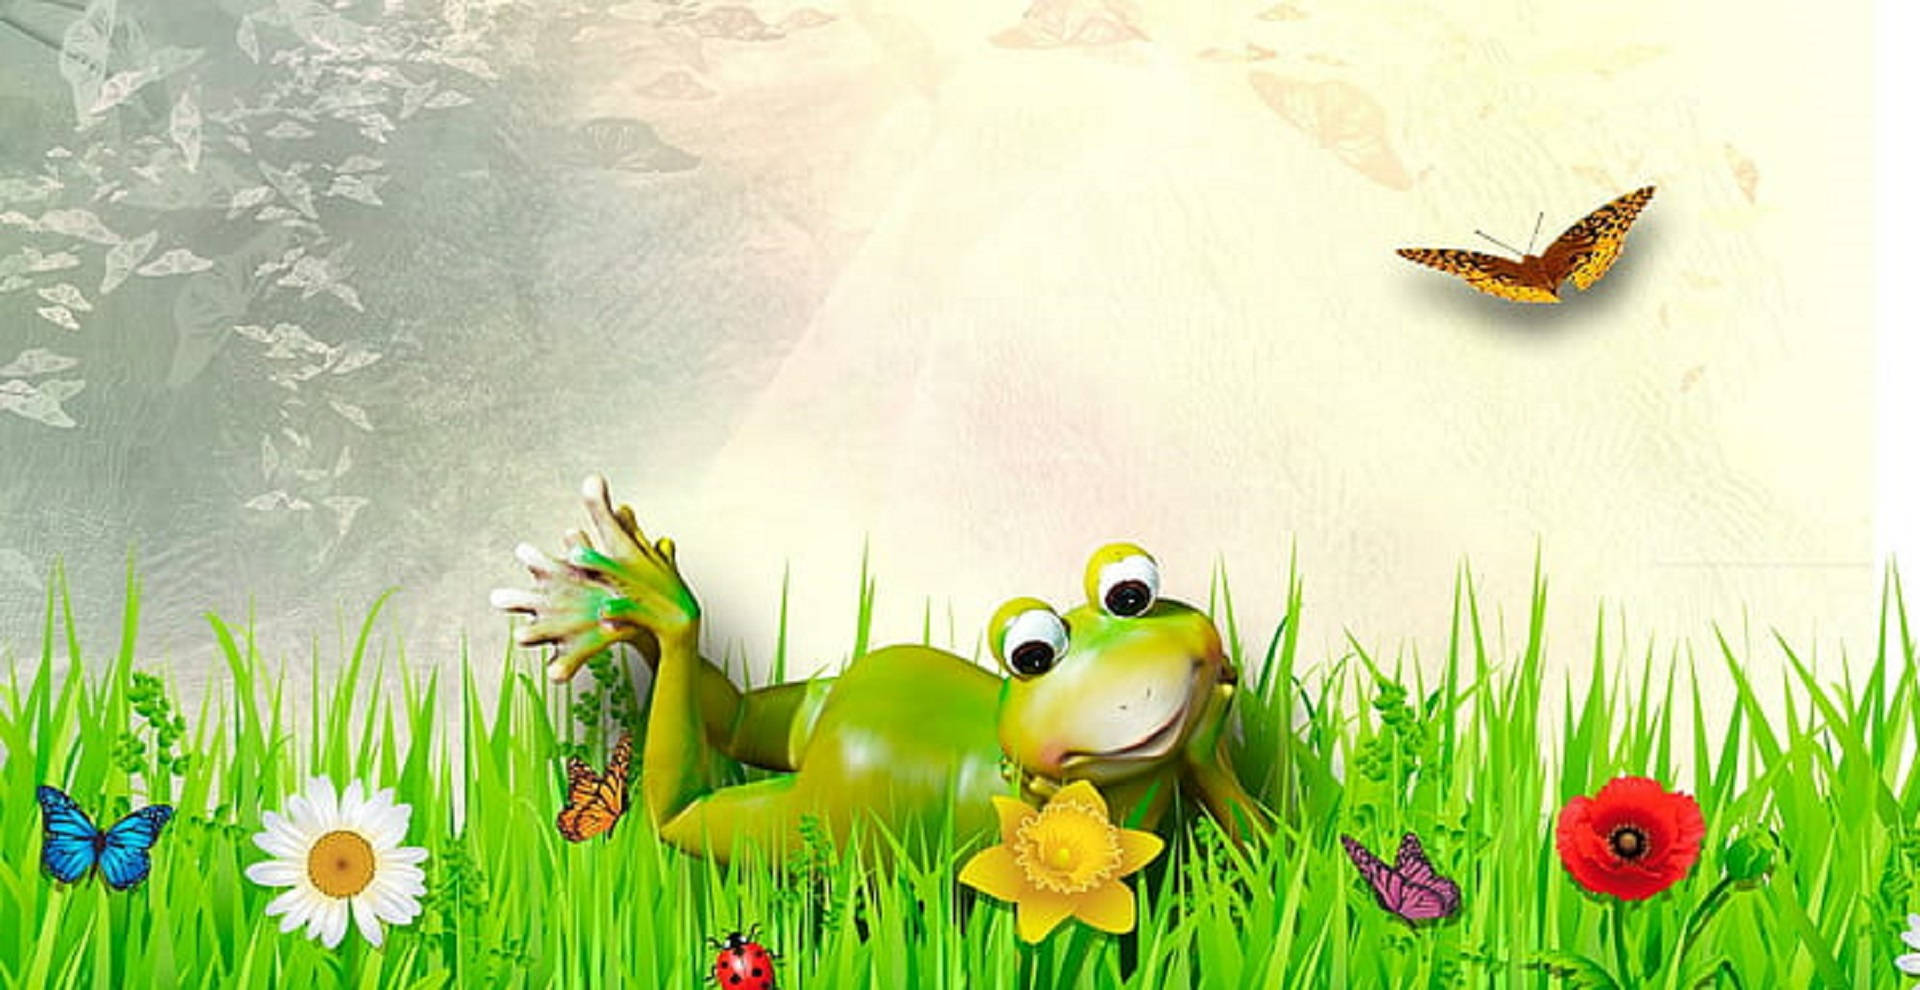 Whimsical Frog In Grass Wallpaper